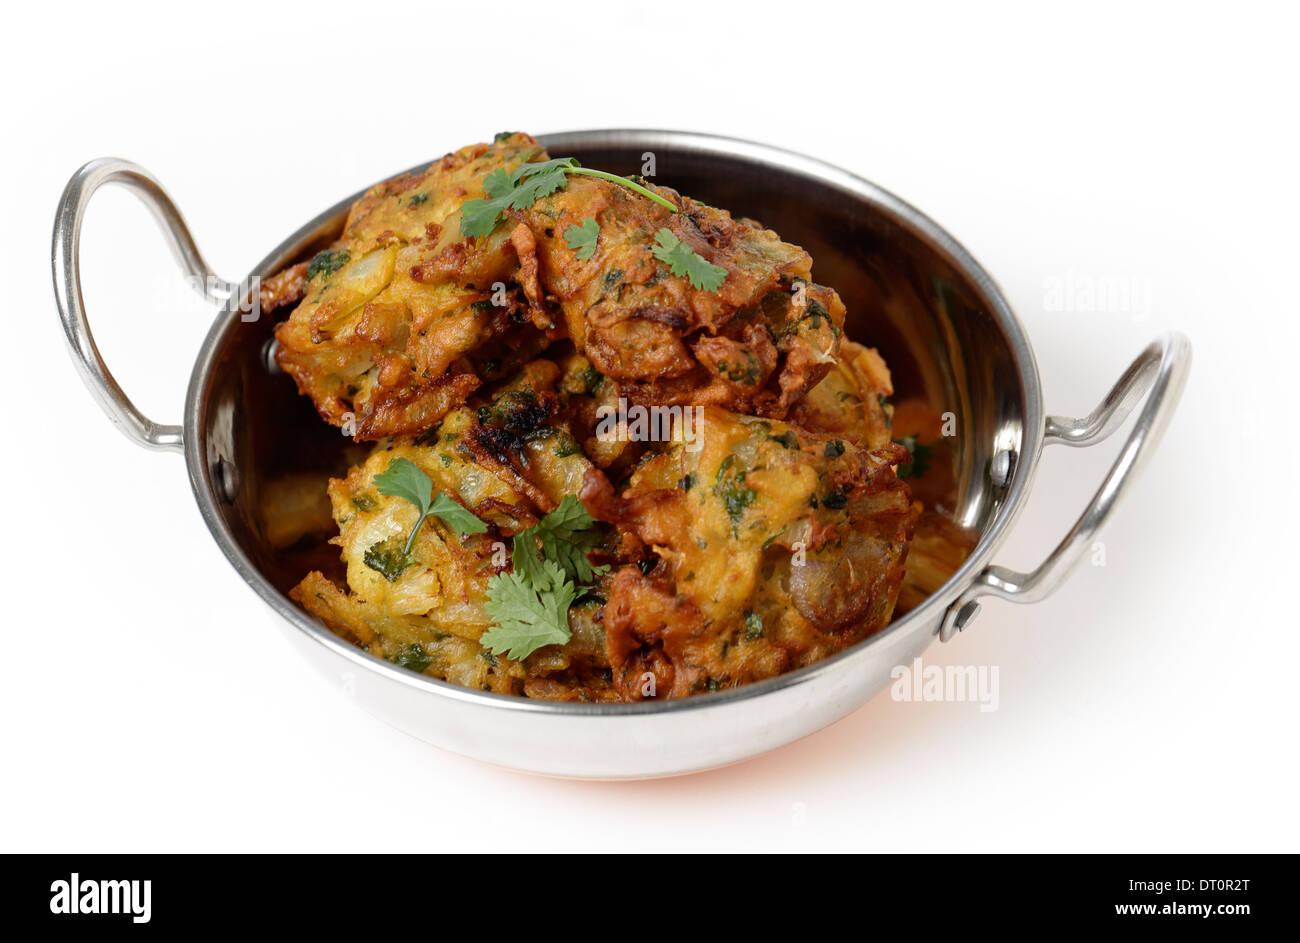 https://c8.alamy.com/comp/DT0R2T/homemade-onion-bhajis-an-indian-appetiser-served-in-a-kadai-or-karahi-DT0R2T.jpg